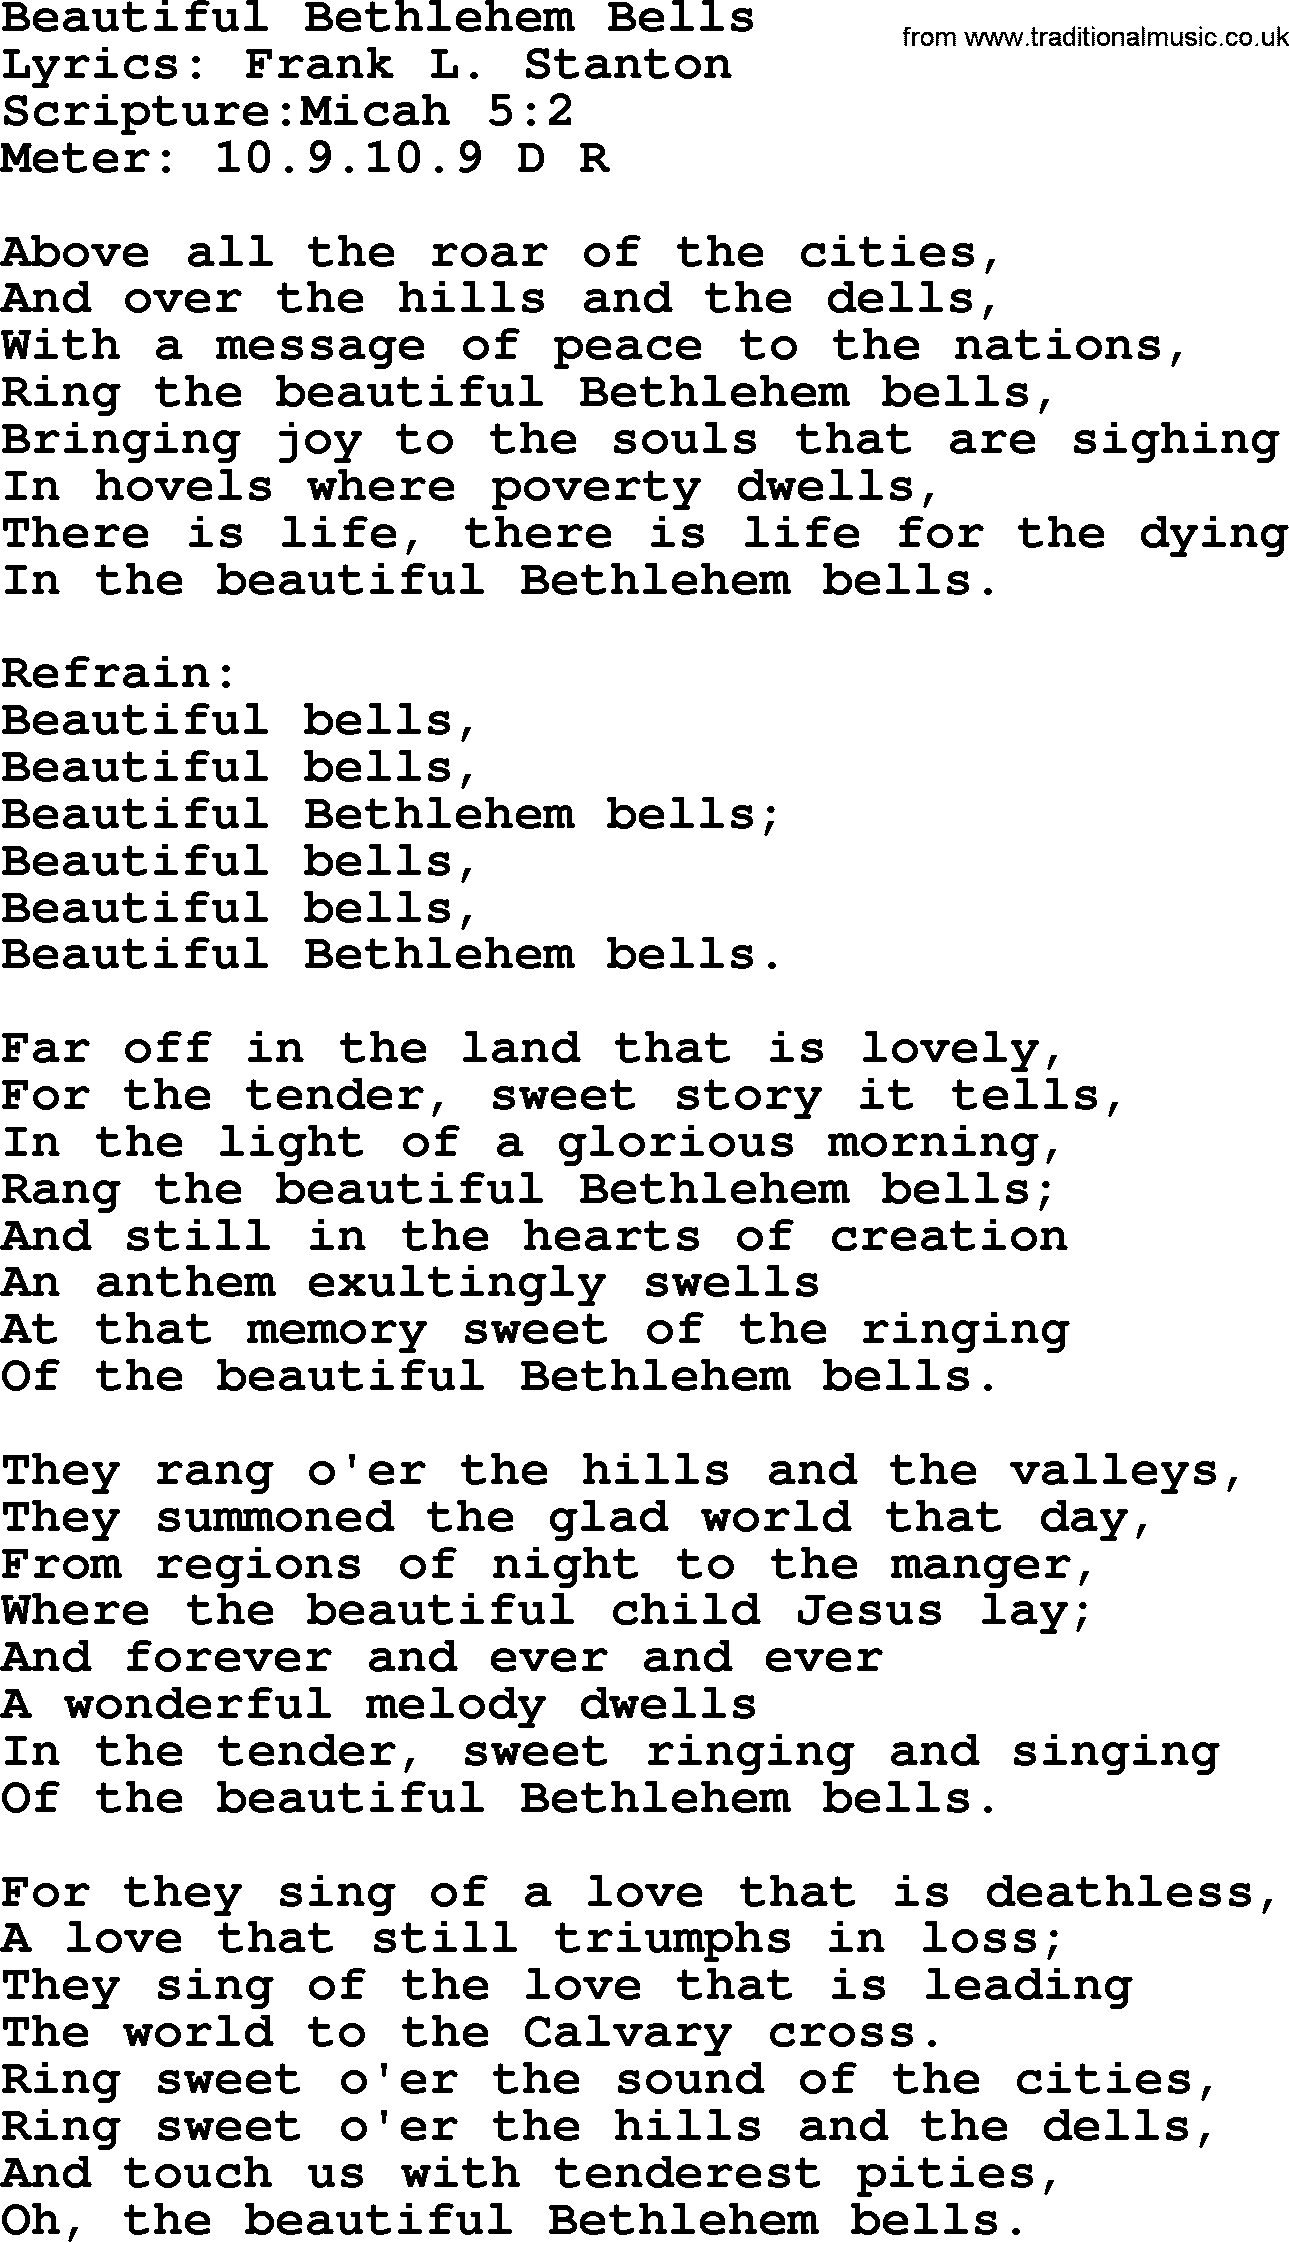 Hymns about  Angels, Hymn: Beautiful Bethlehem Bells, lyrics, sheet music, midi & Mp3 music with PDF